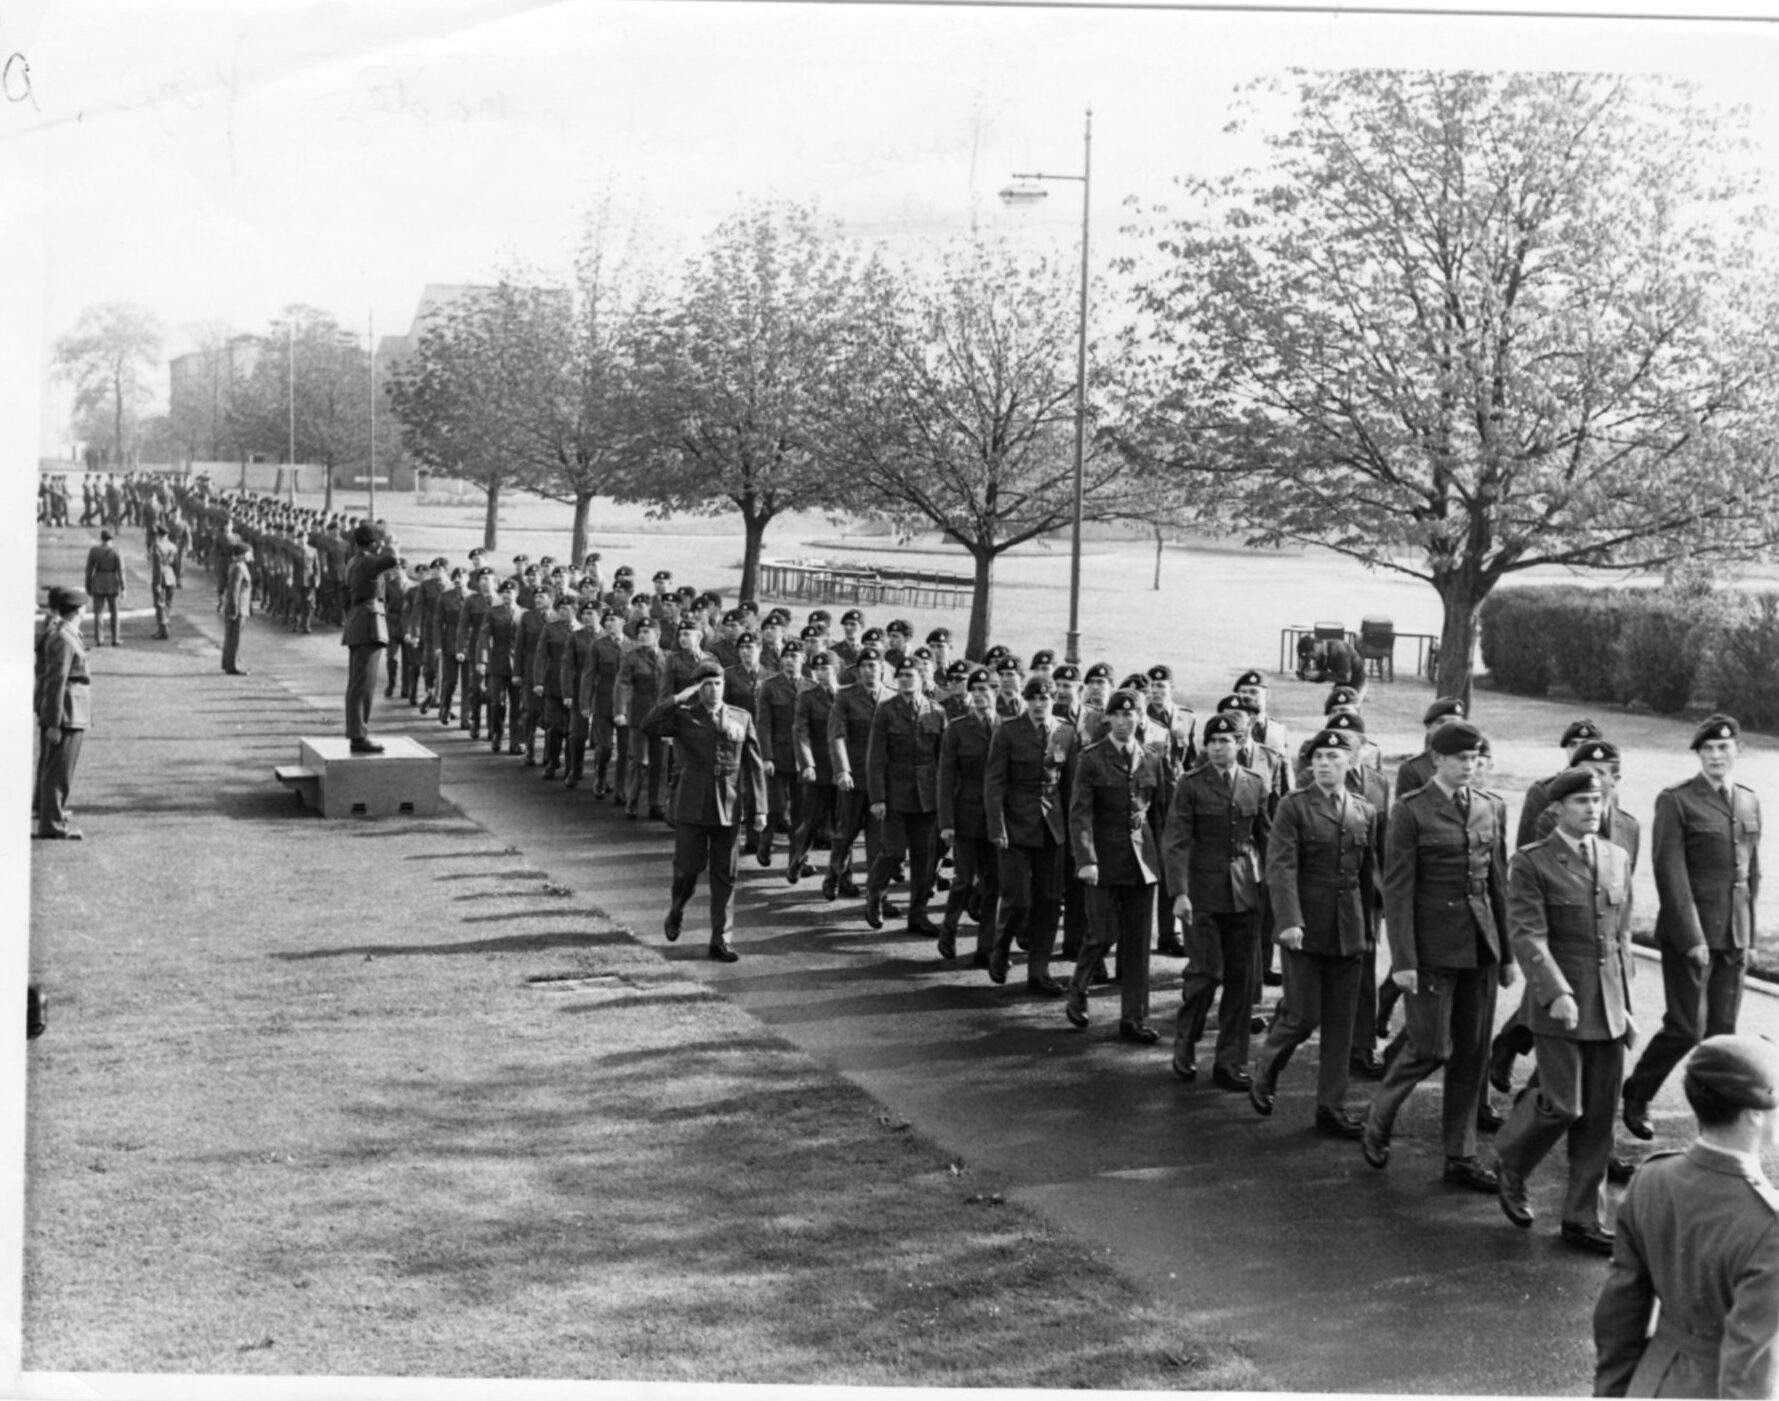 The inaugural Royal Marines parade at RM Condor in Arbroath in 1971.